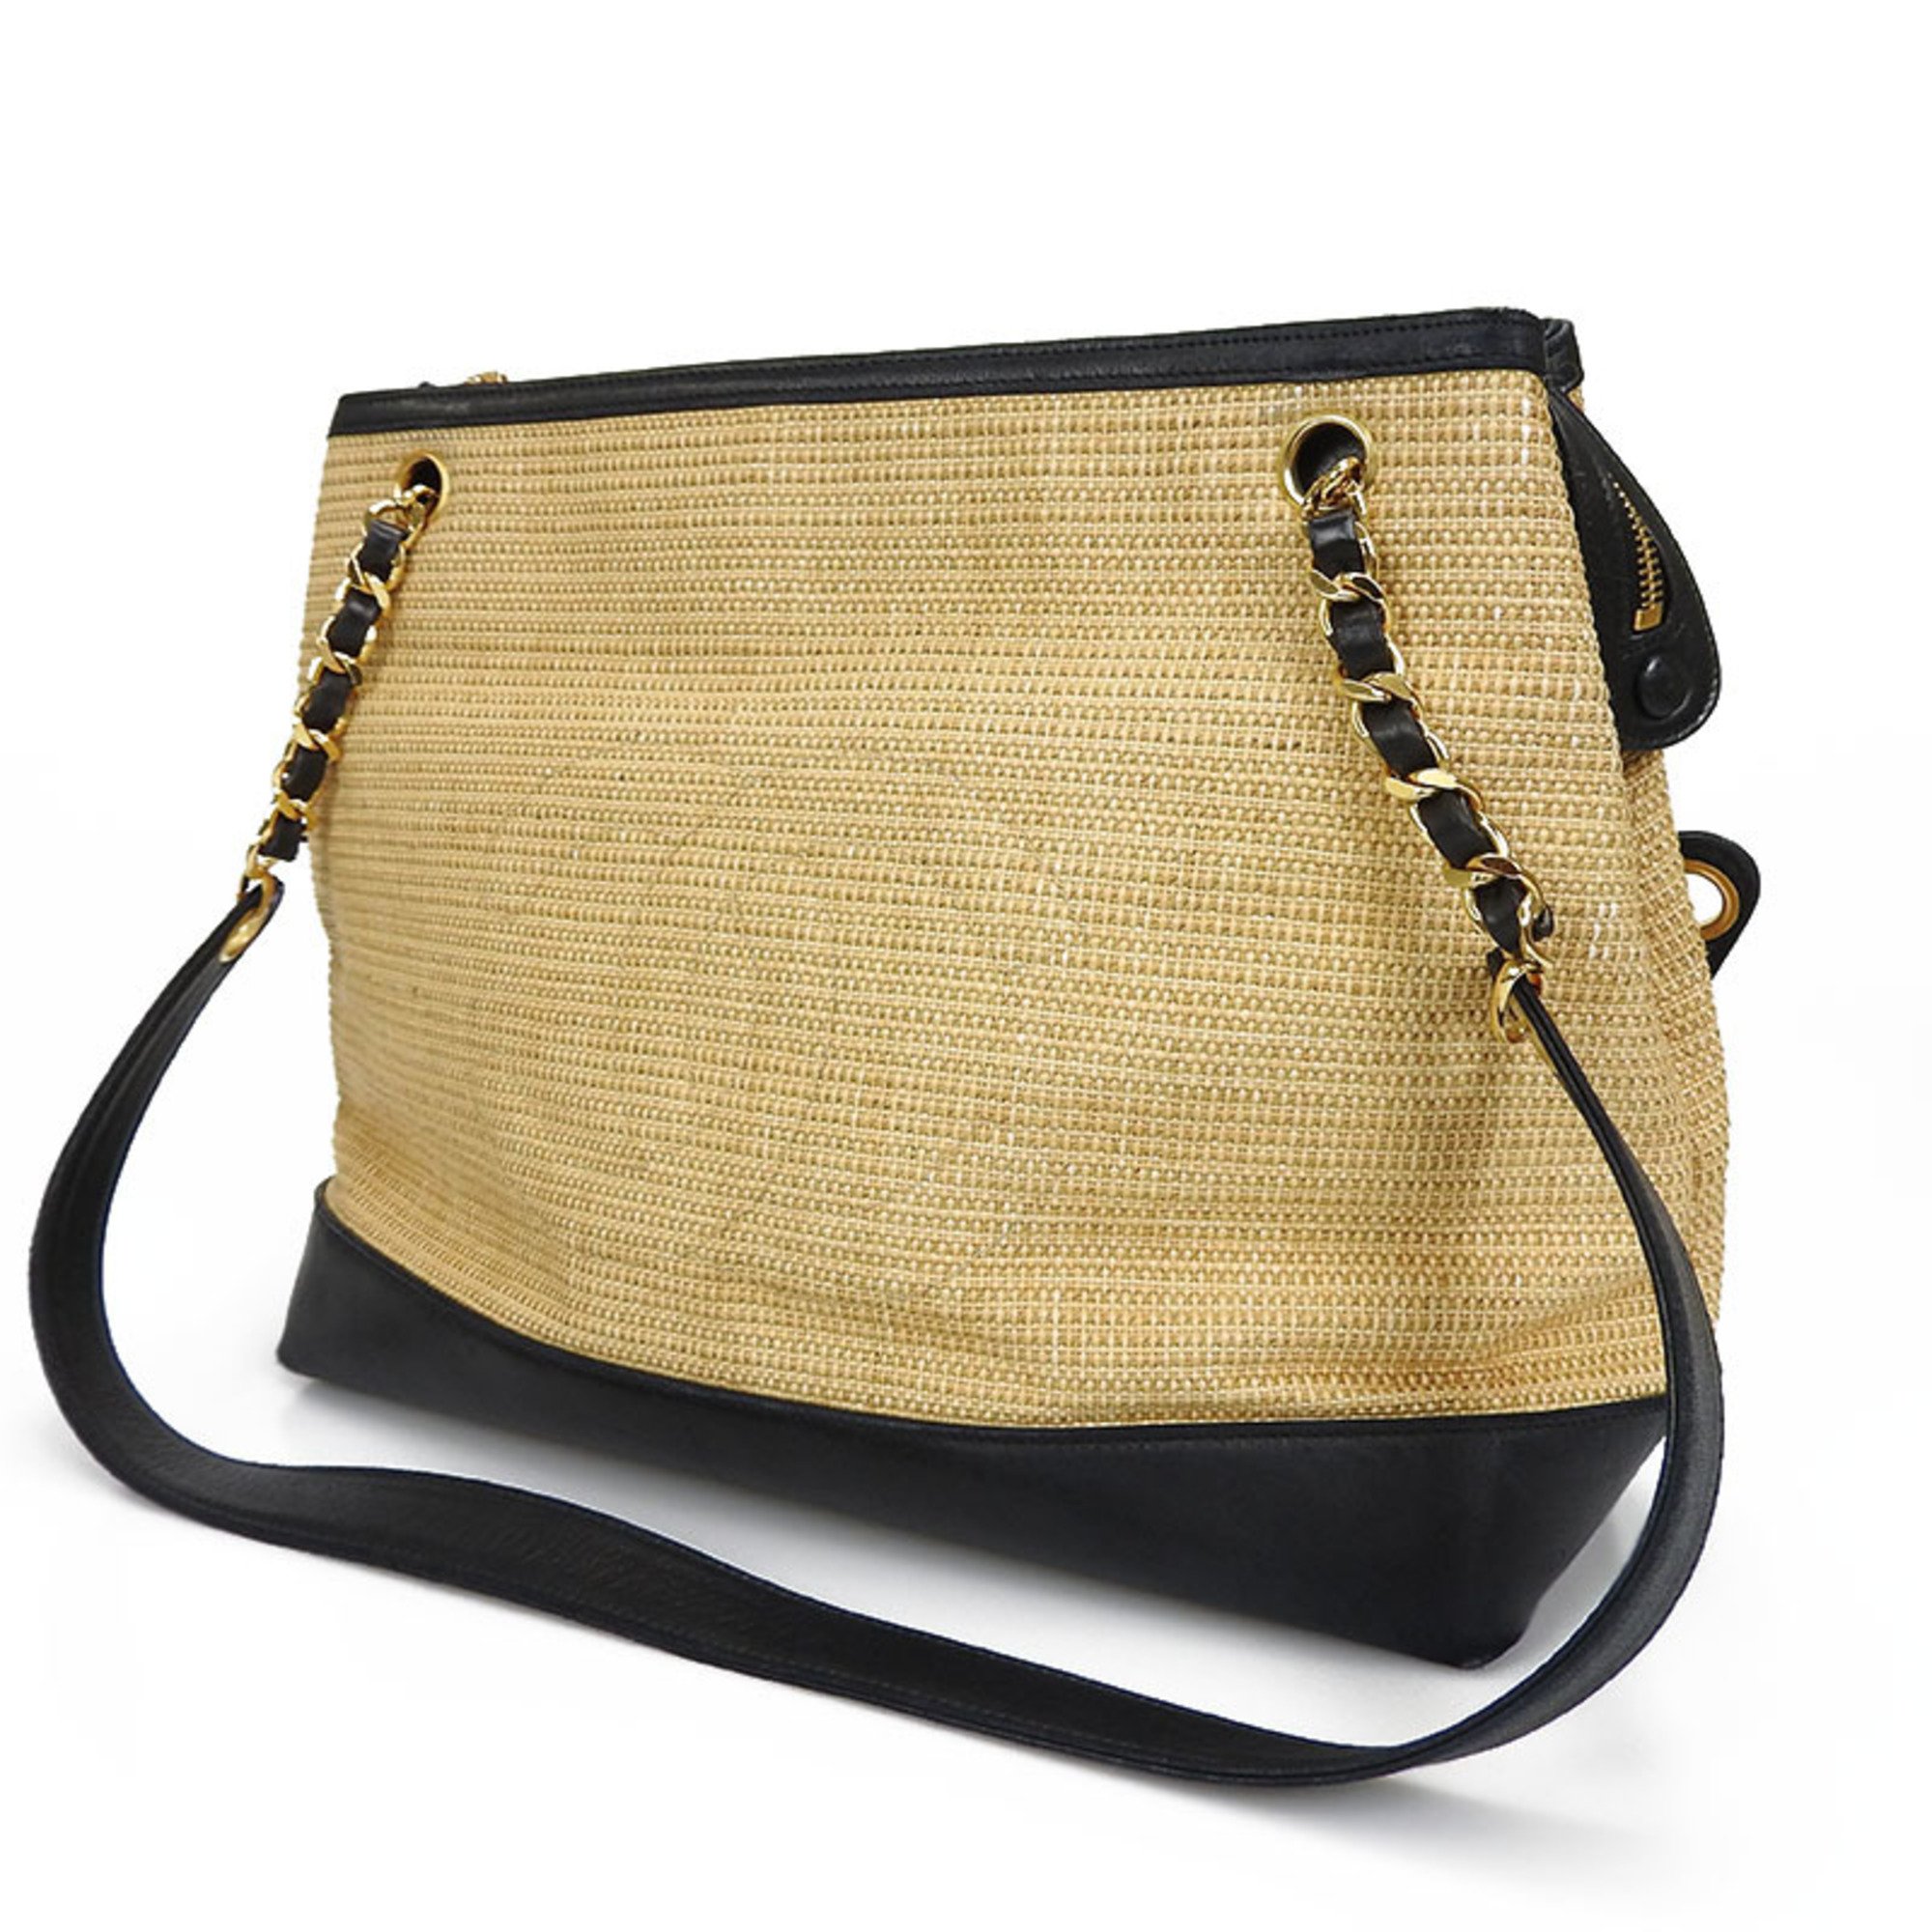 CHANEL Chain Tote Bag Straw No. 2 Coco Mark Leather Gold Hardware Shoulder chain totebag coco gold lambskin black